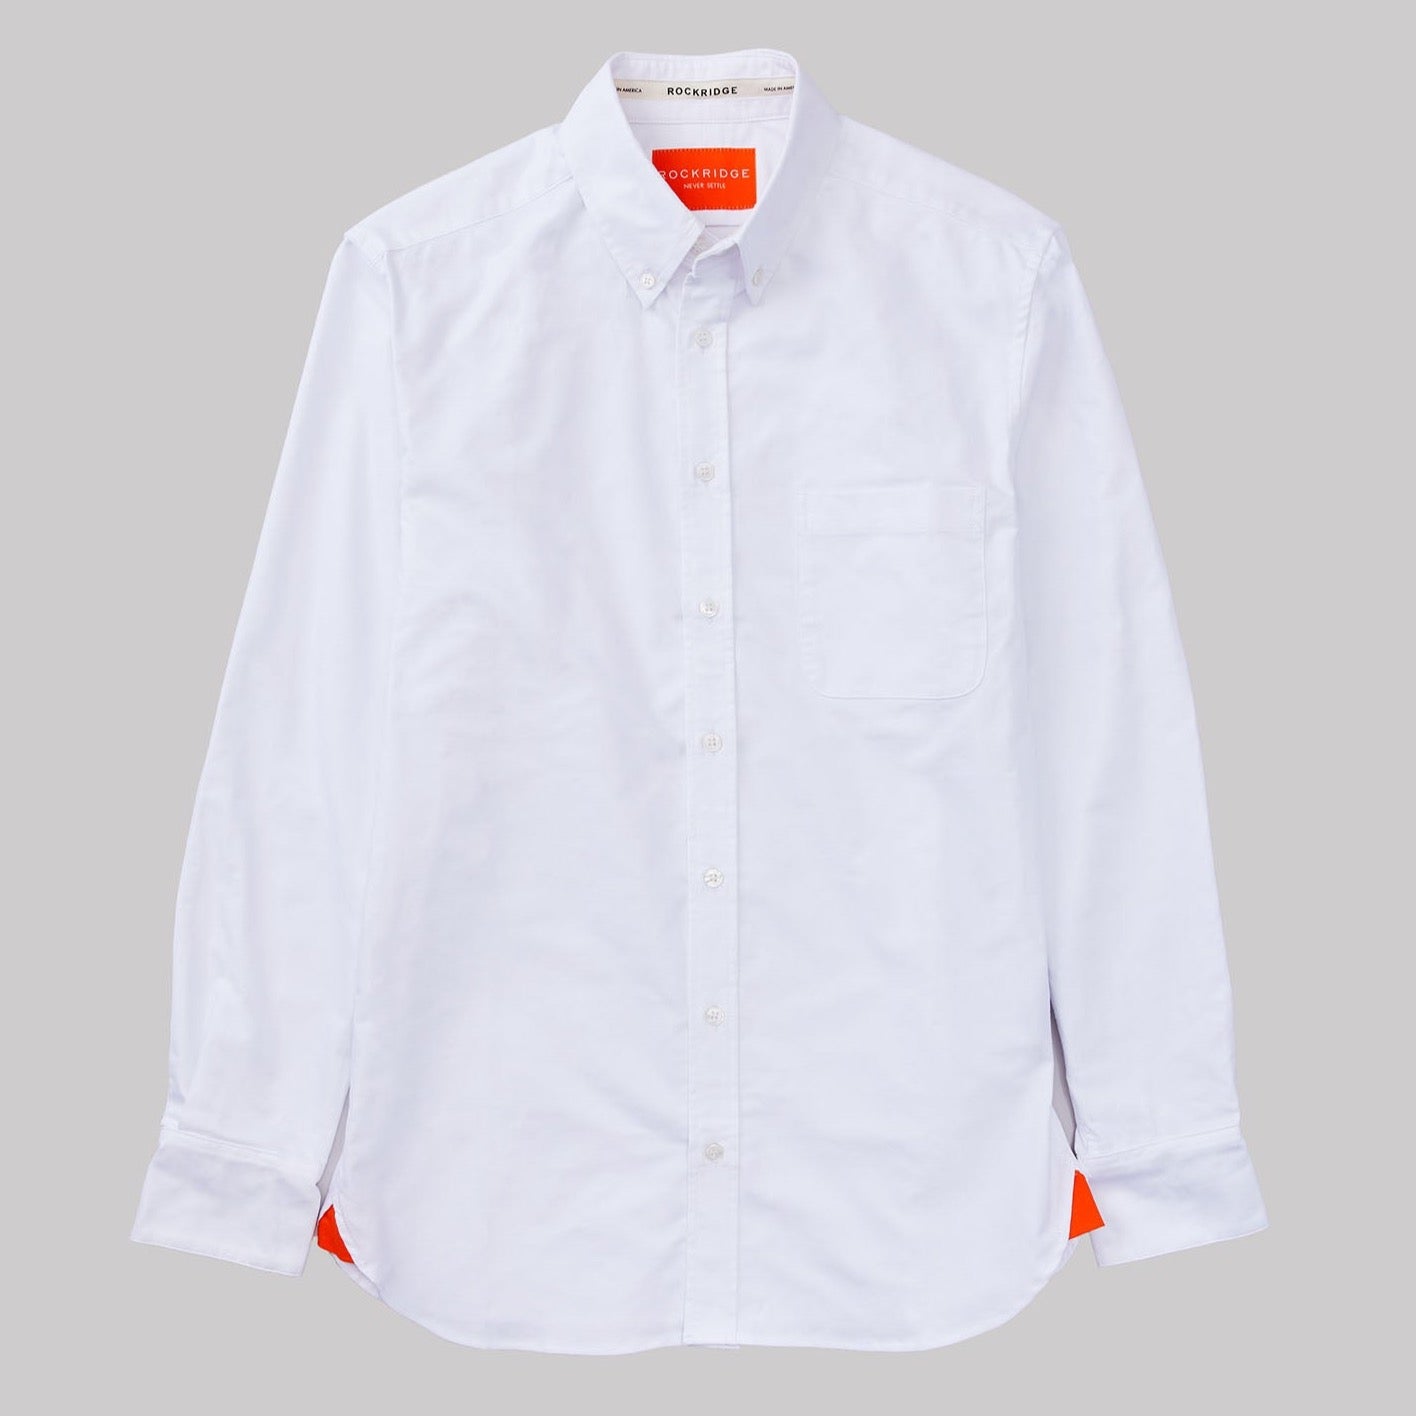 white Oxford button down shirt